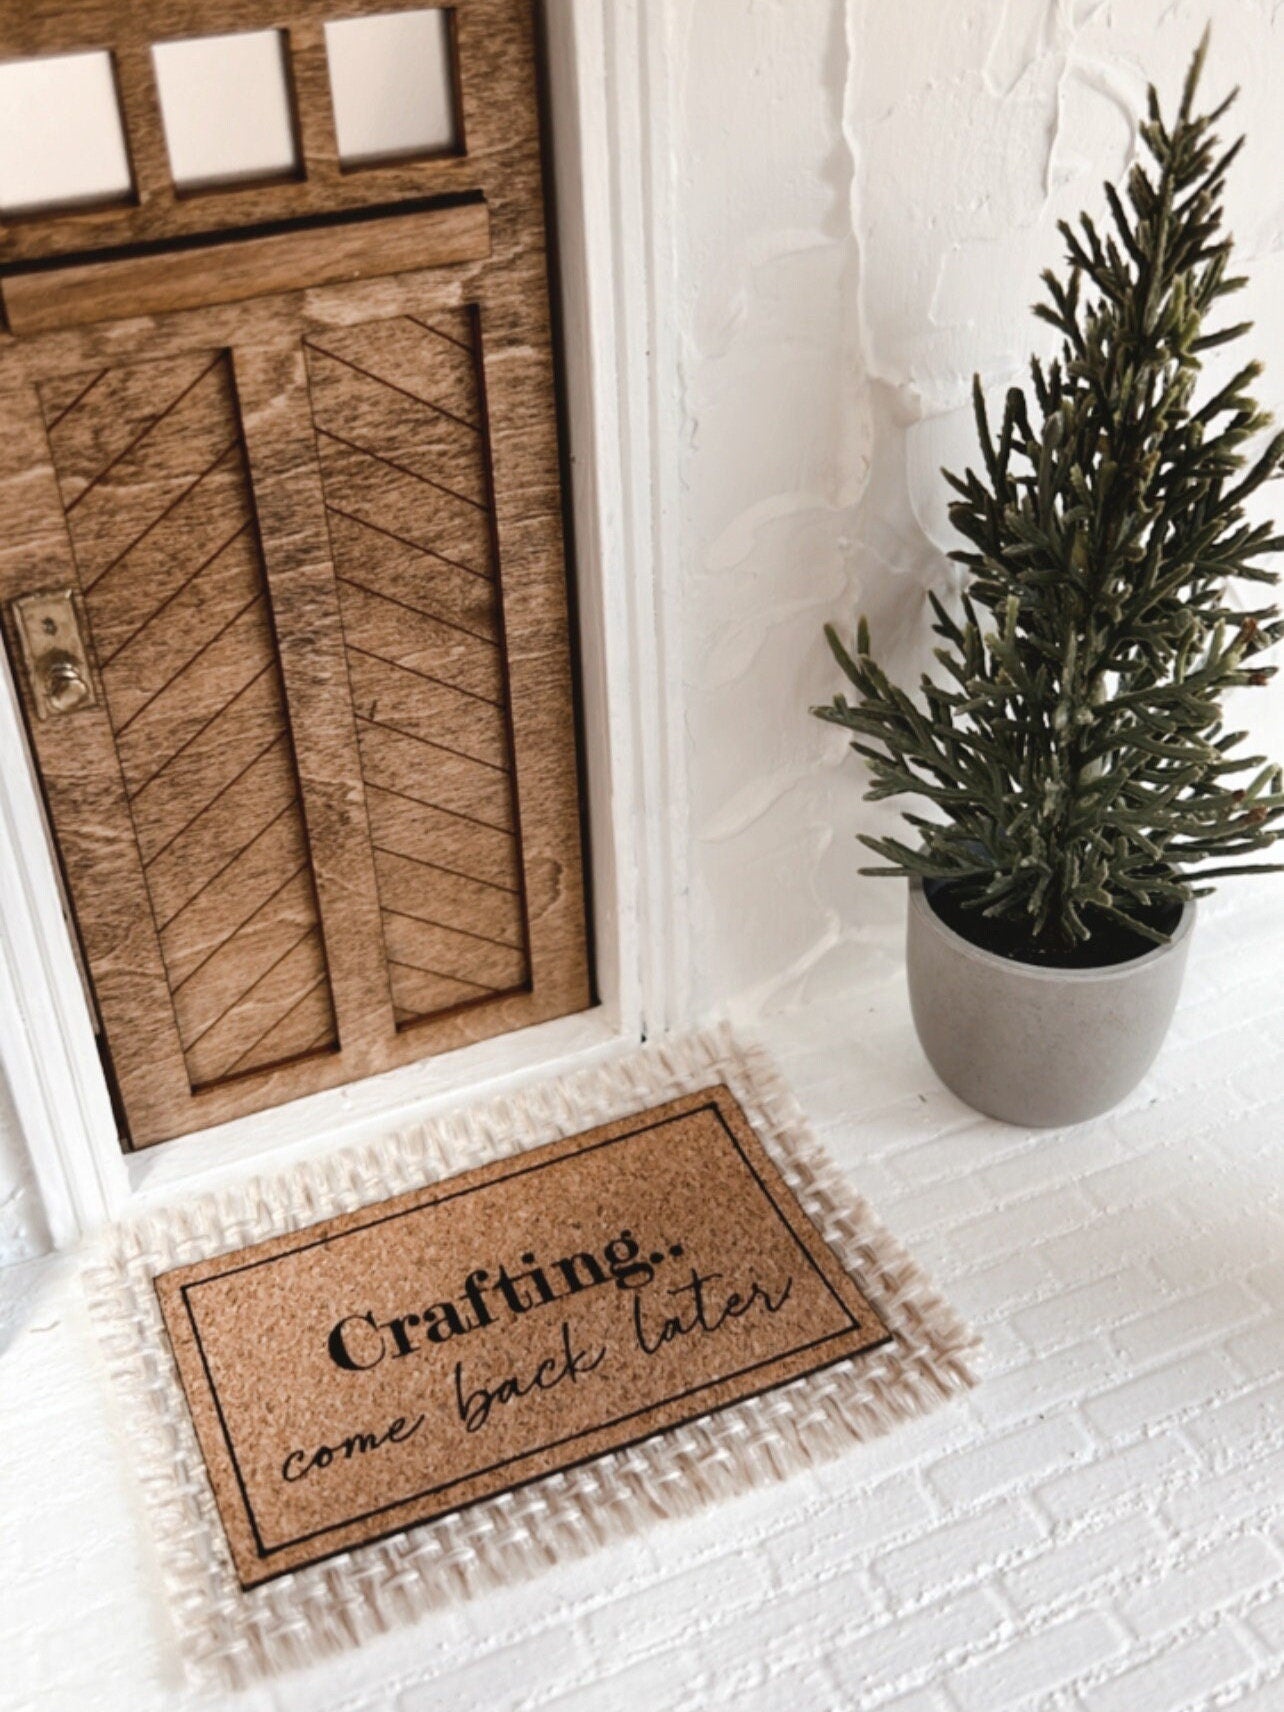 Crafting Doormat